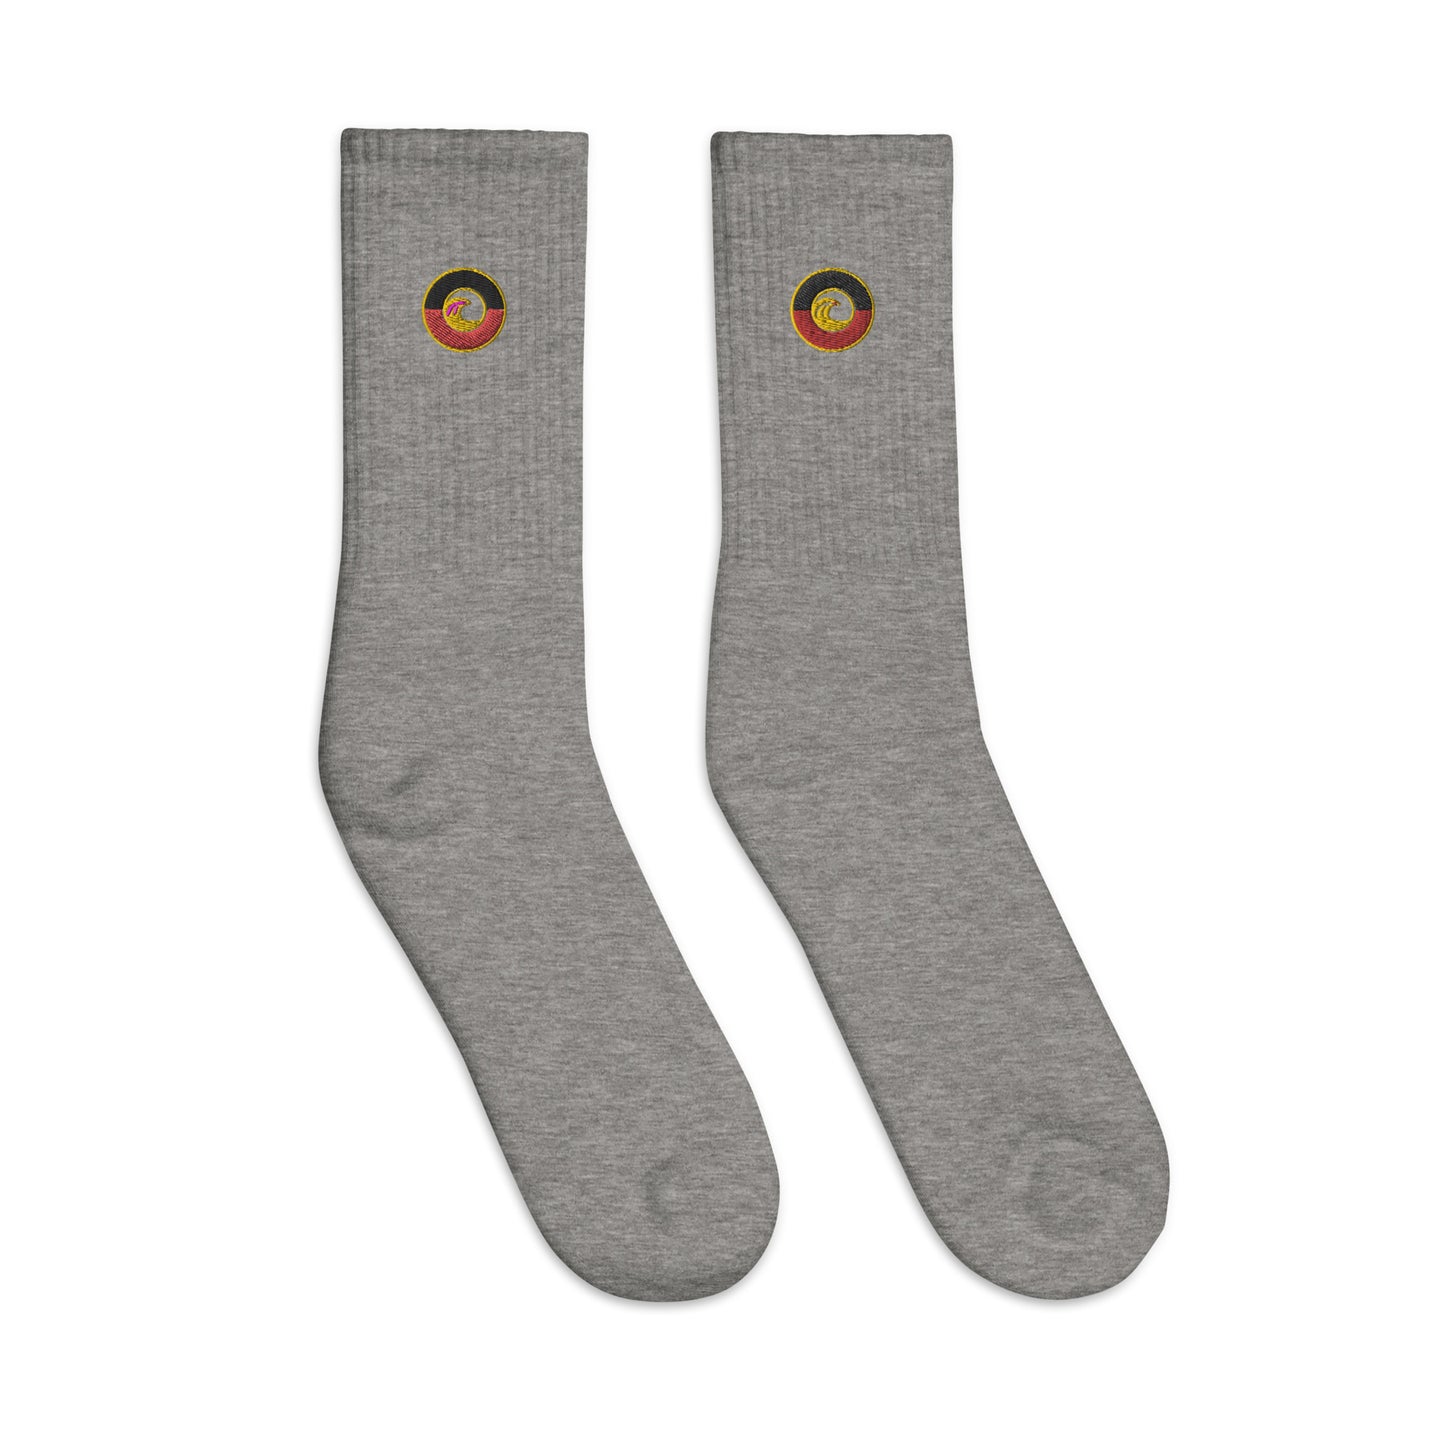 Aboriginal Flag Wave Embroidered socks